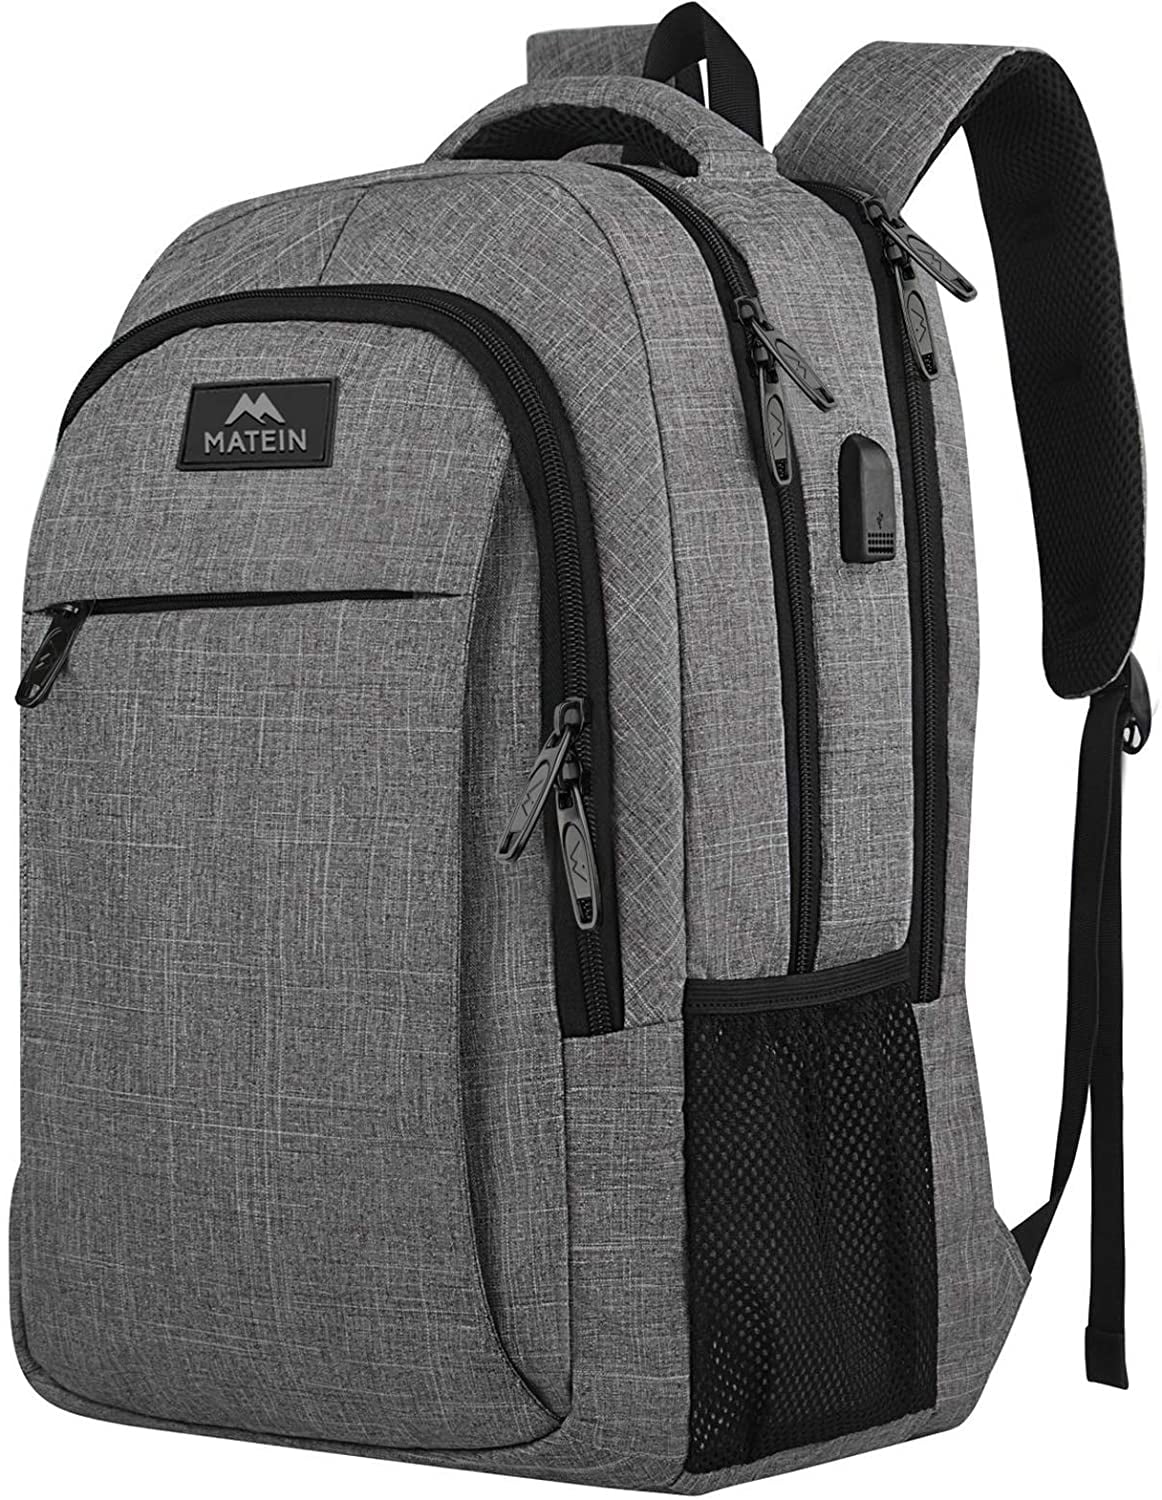 Travel Laptop Backpack,Flowers Birds On WaterResistant College School Computer Bag Gifts for Men & Women Fits 17 Inch Notebook 